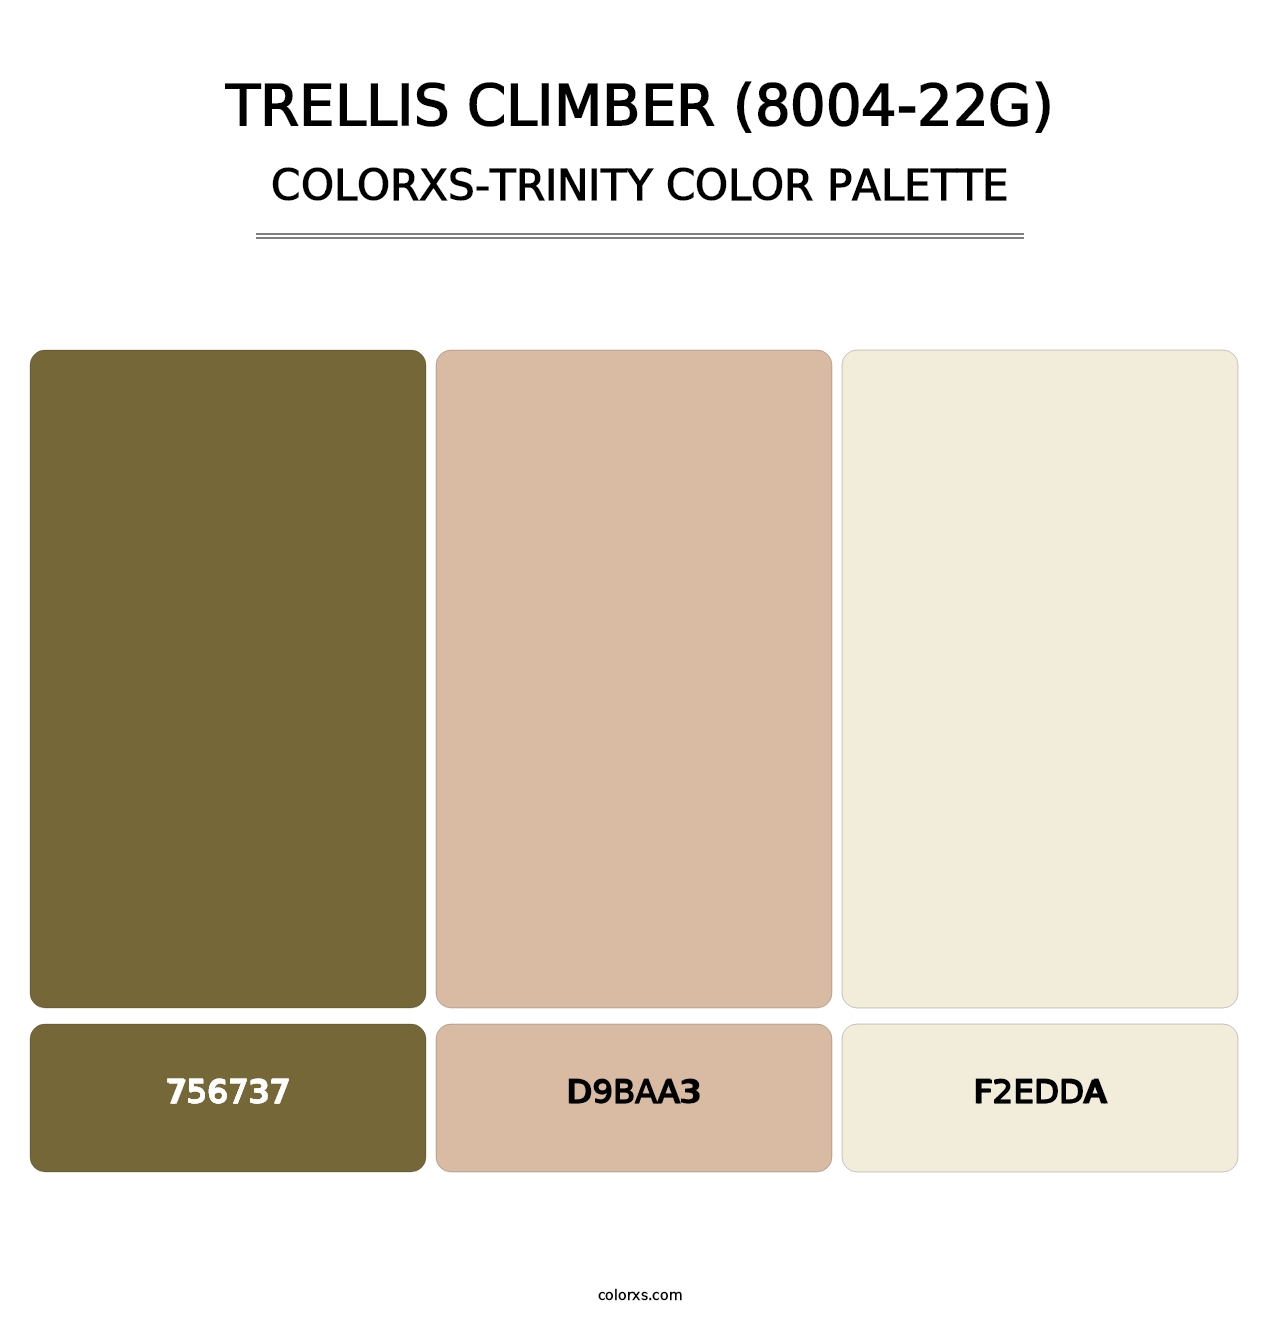 Trellis Climber (8004-22G) - Colorxs Trinity Palette